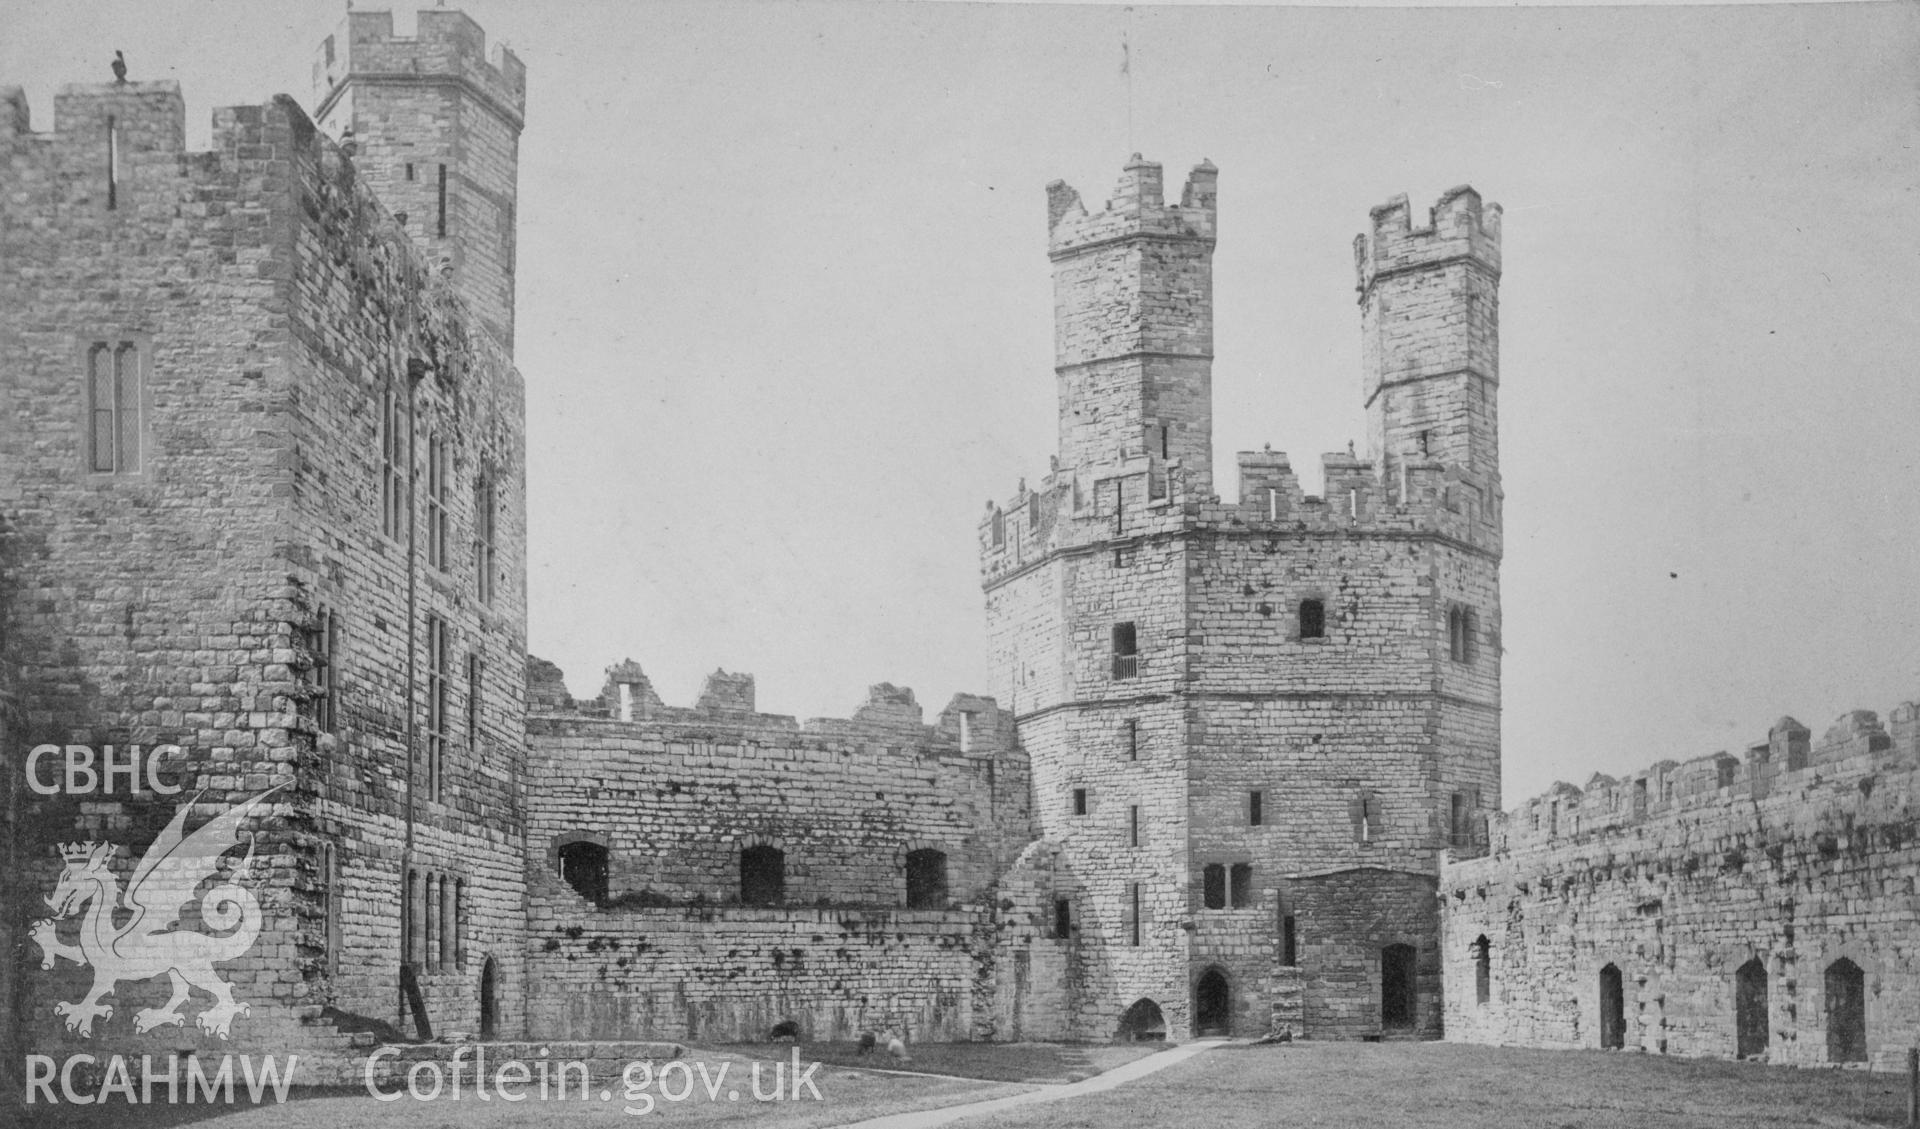 Digital copy of an acetate negative showing Caernarfon Castle.